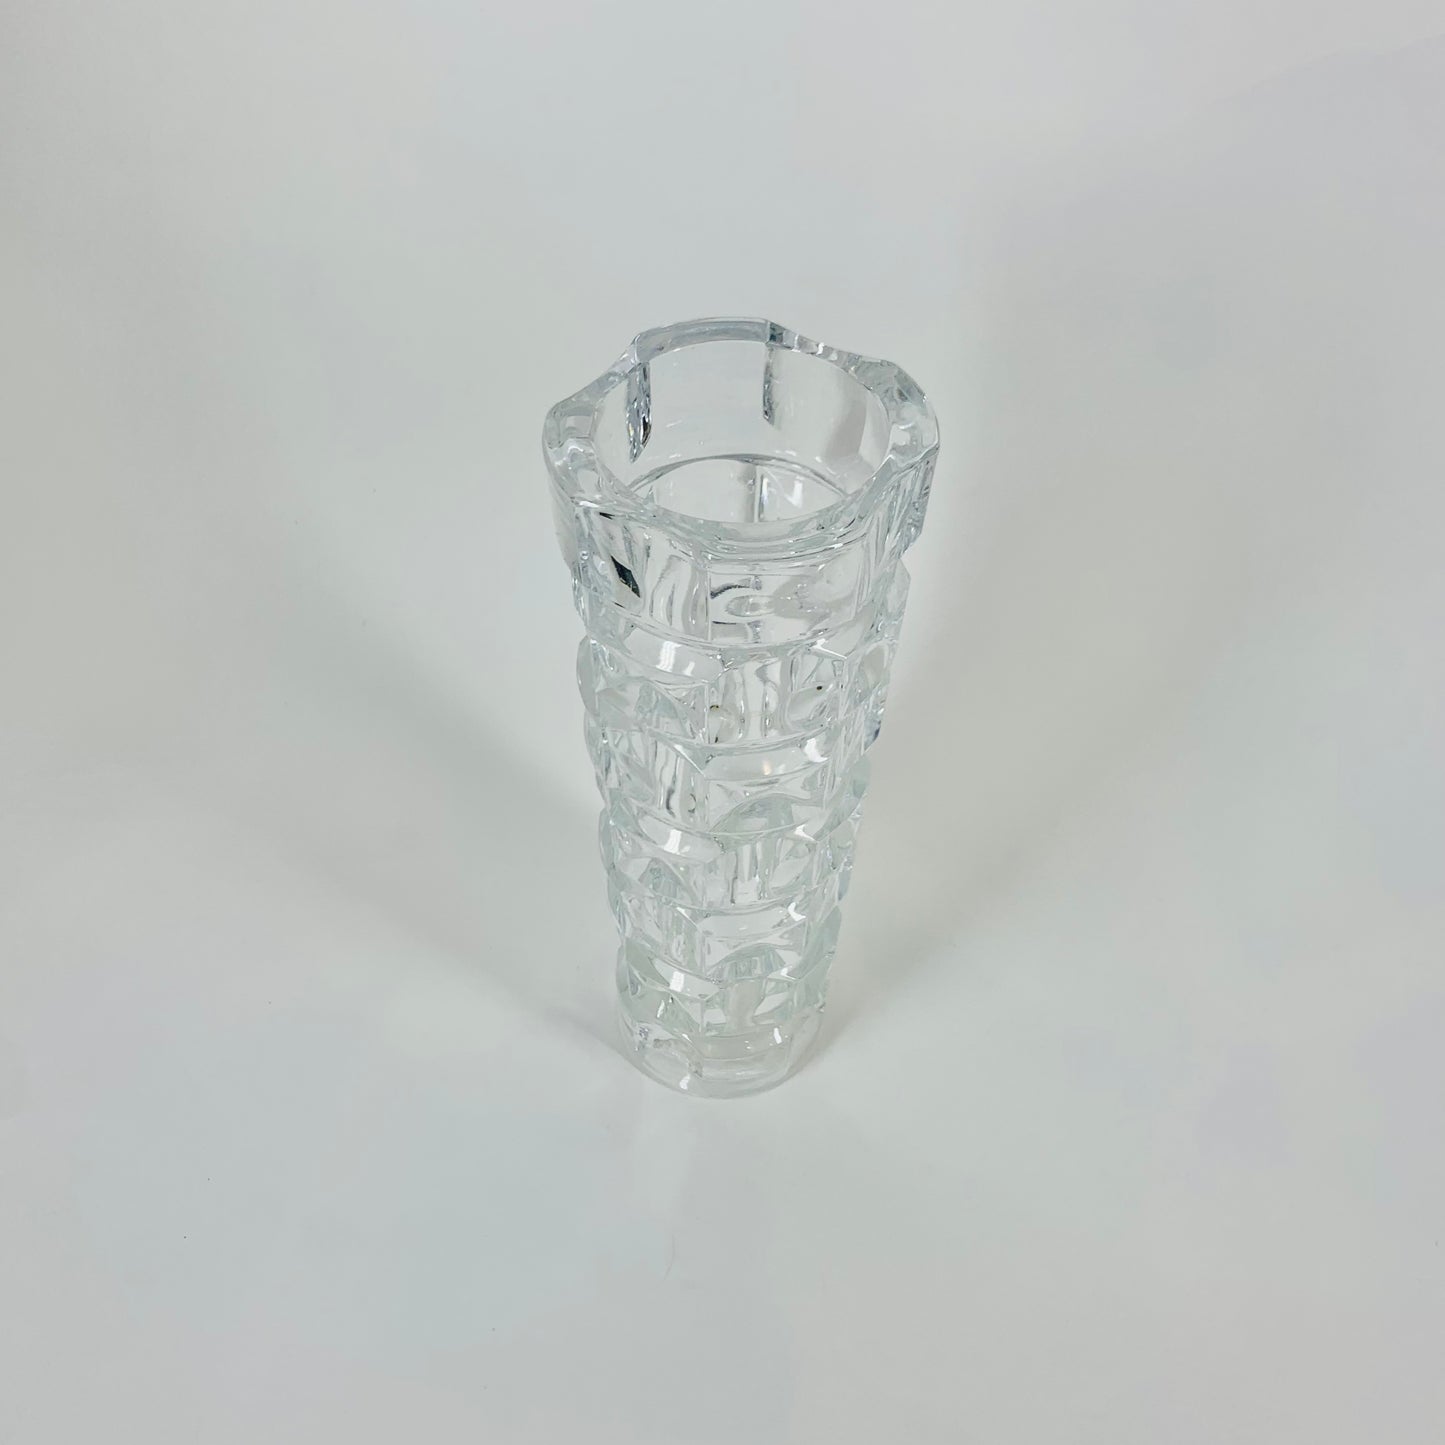 1960s J G Durand France Windsor Rubis clear glass vase